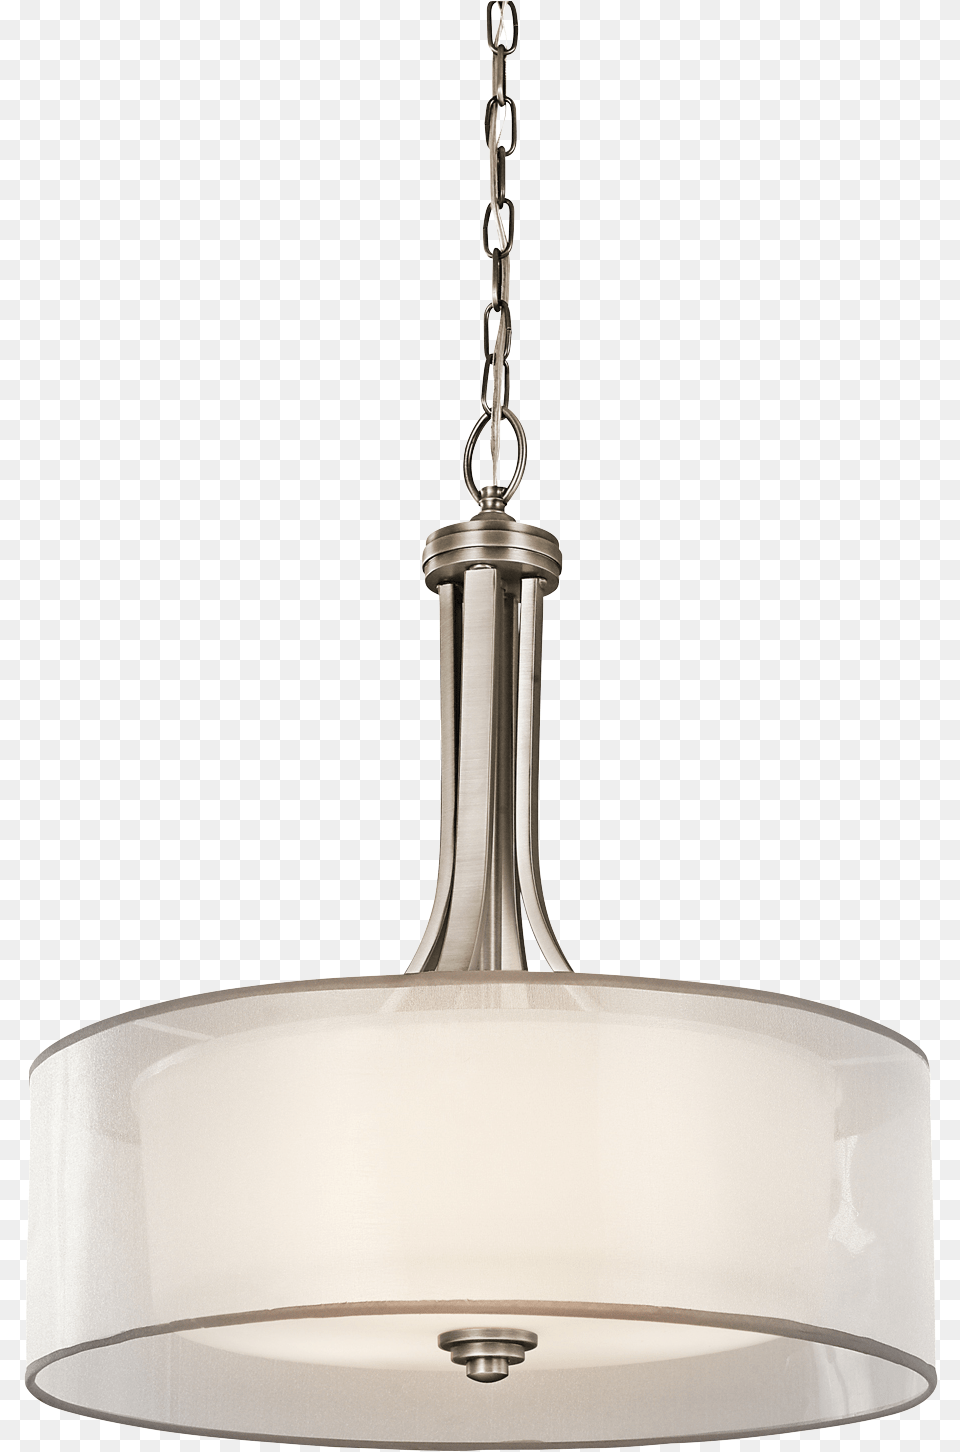 Affordable Light Inverted Pendant Antique Pewter Loading Kichler Lacey Drum Pendant Lighting In Antique, Chandelier, Lamp, Light Fixture Free Png Download